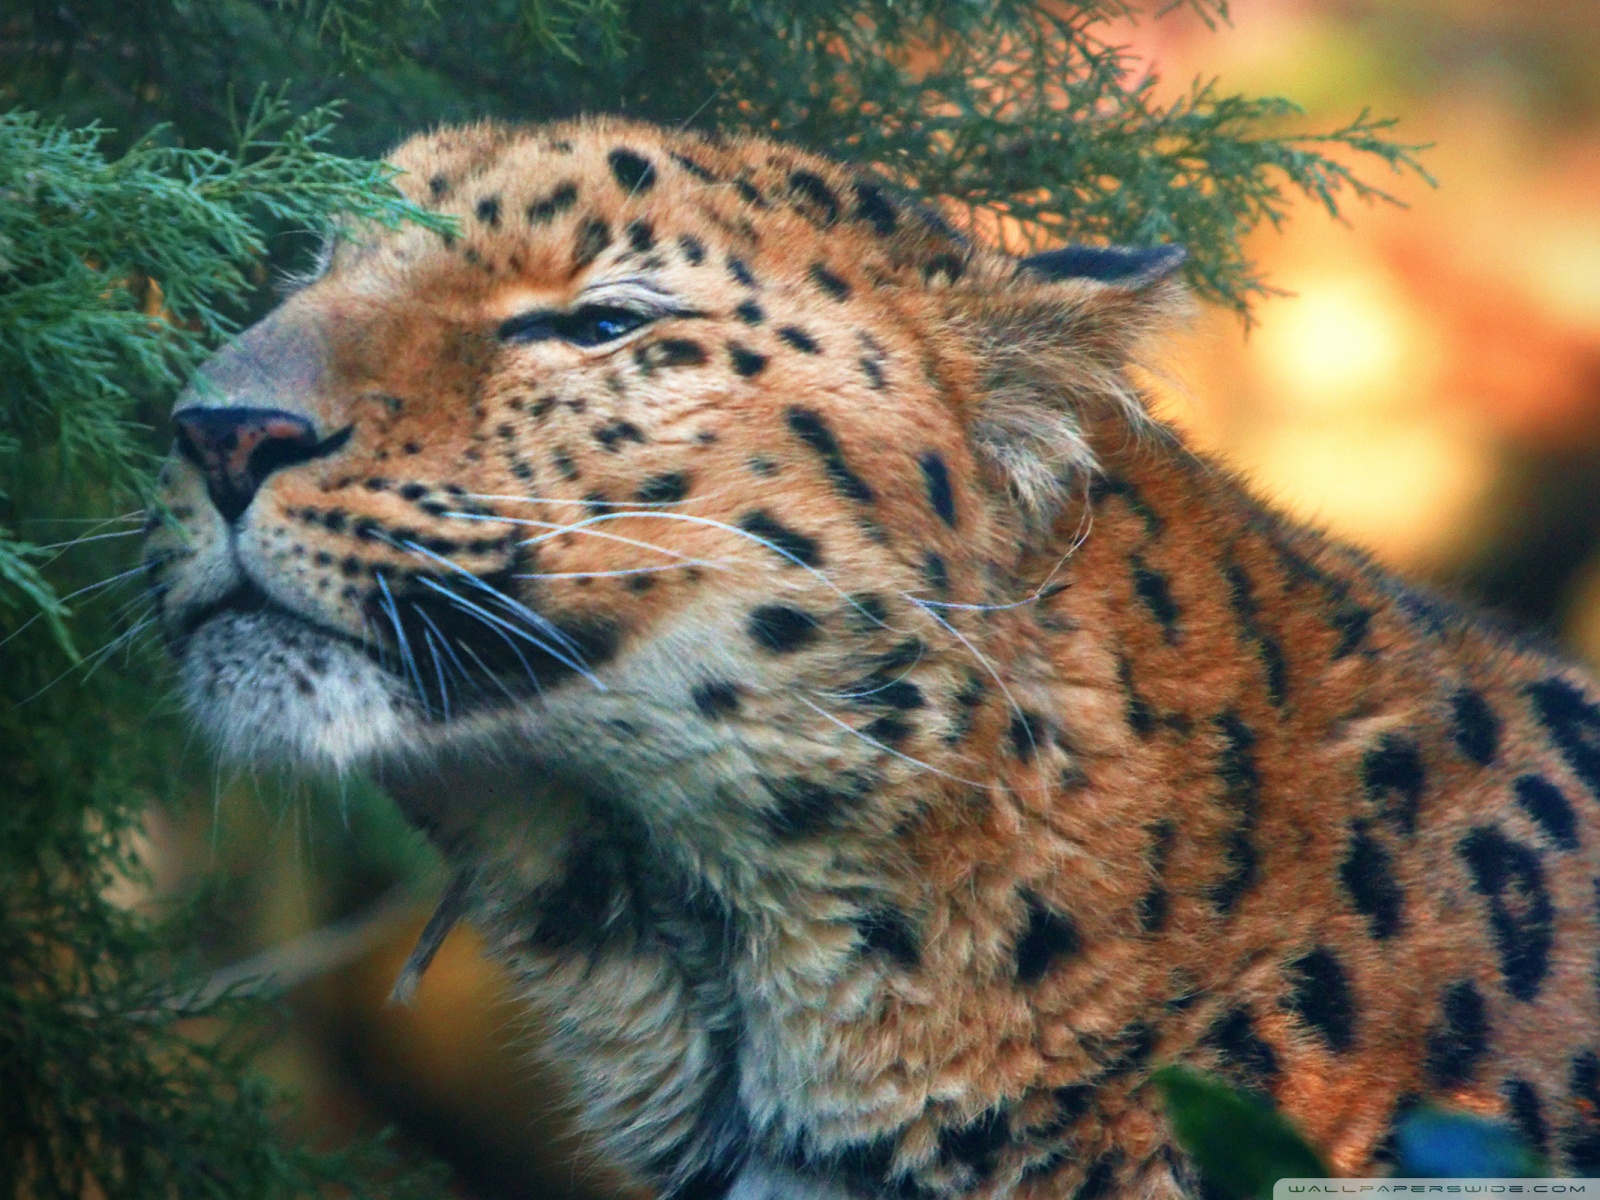  Cute Amur Leopard phone wallpaper by lilone69 1600x1200